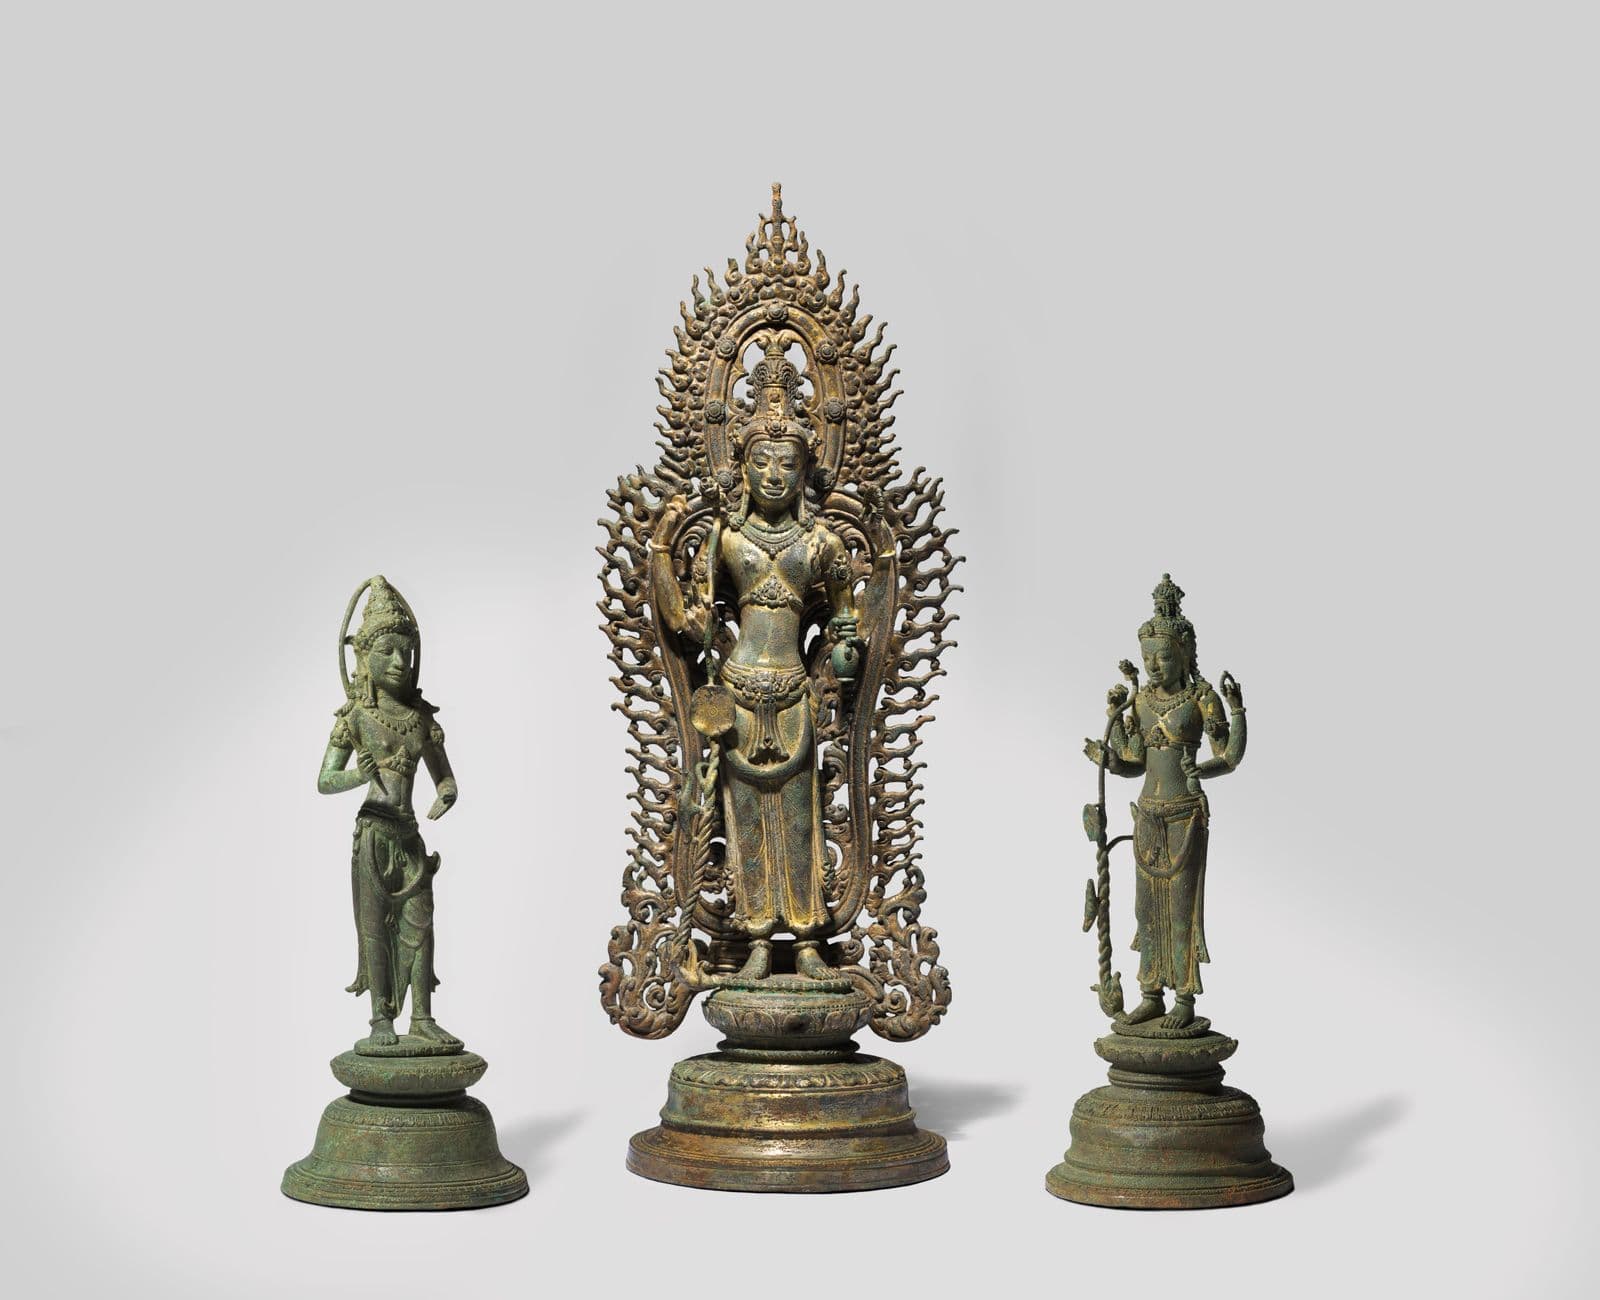 A picture of three bronze sculptures of Cambodian deities